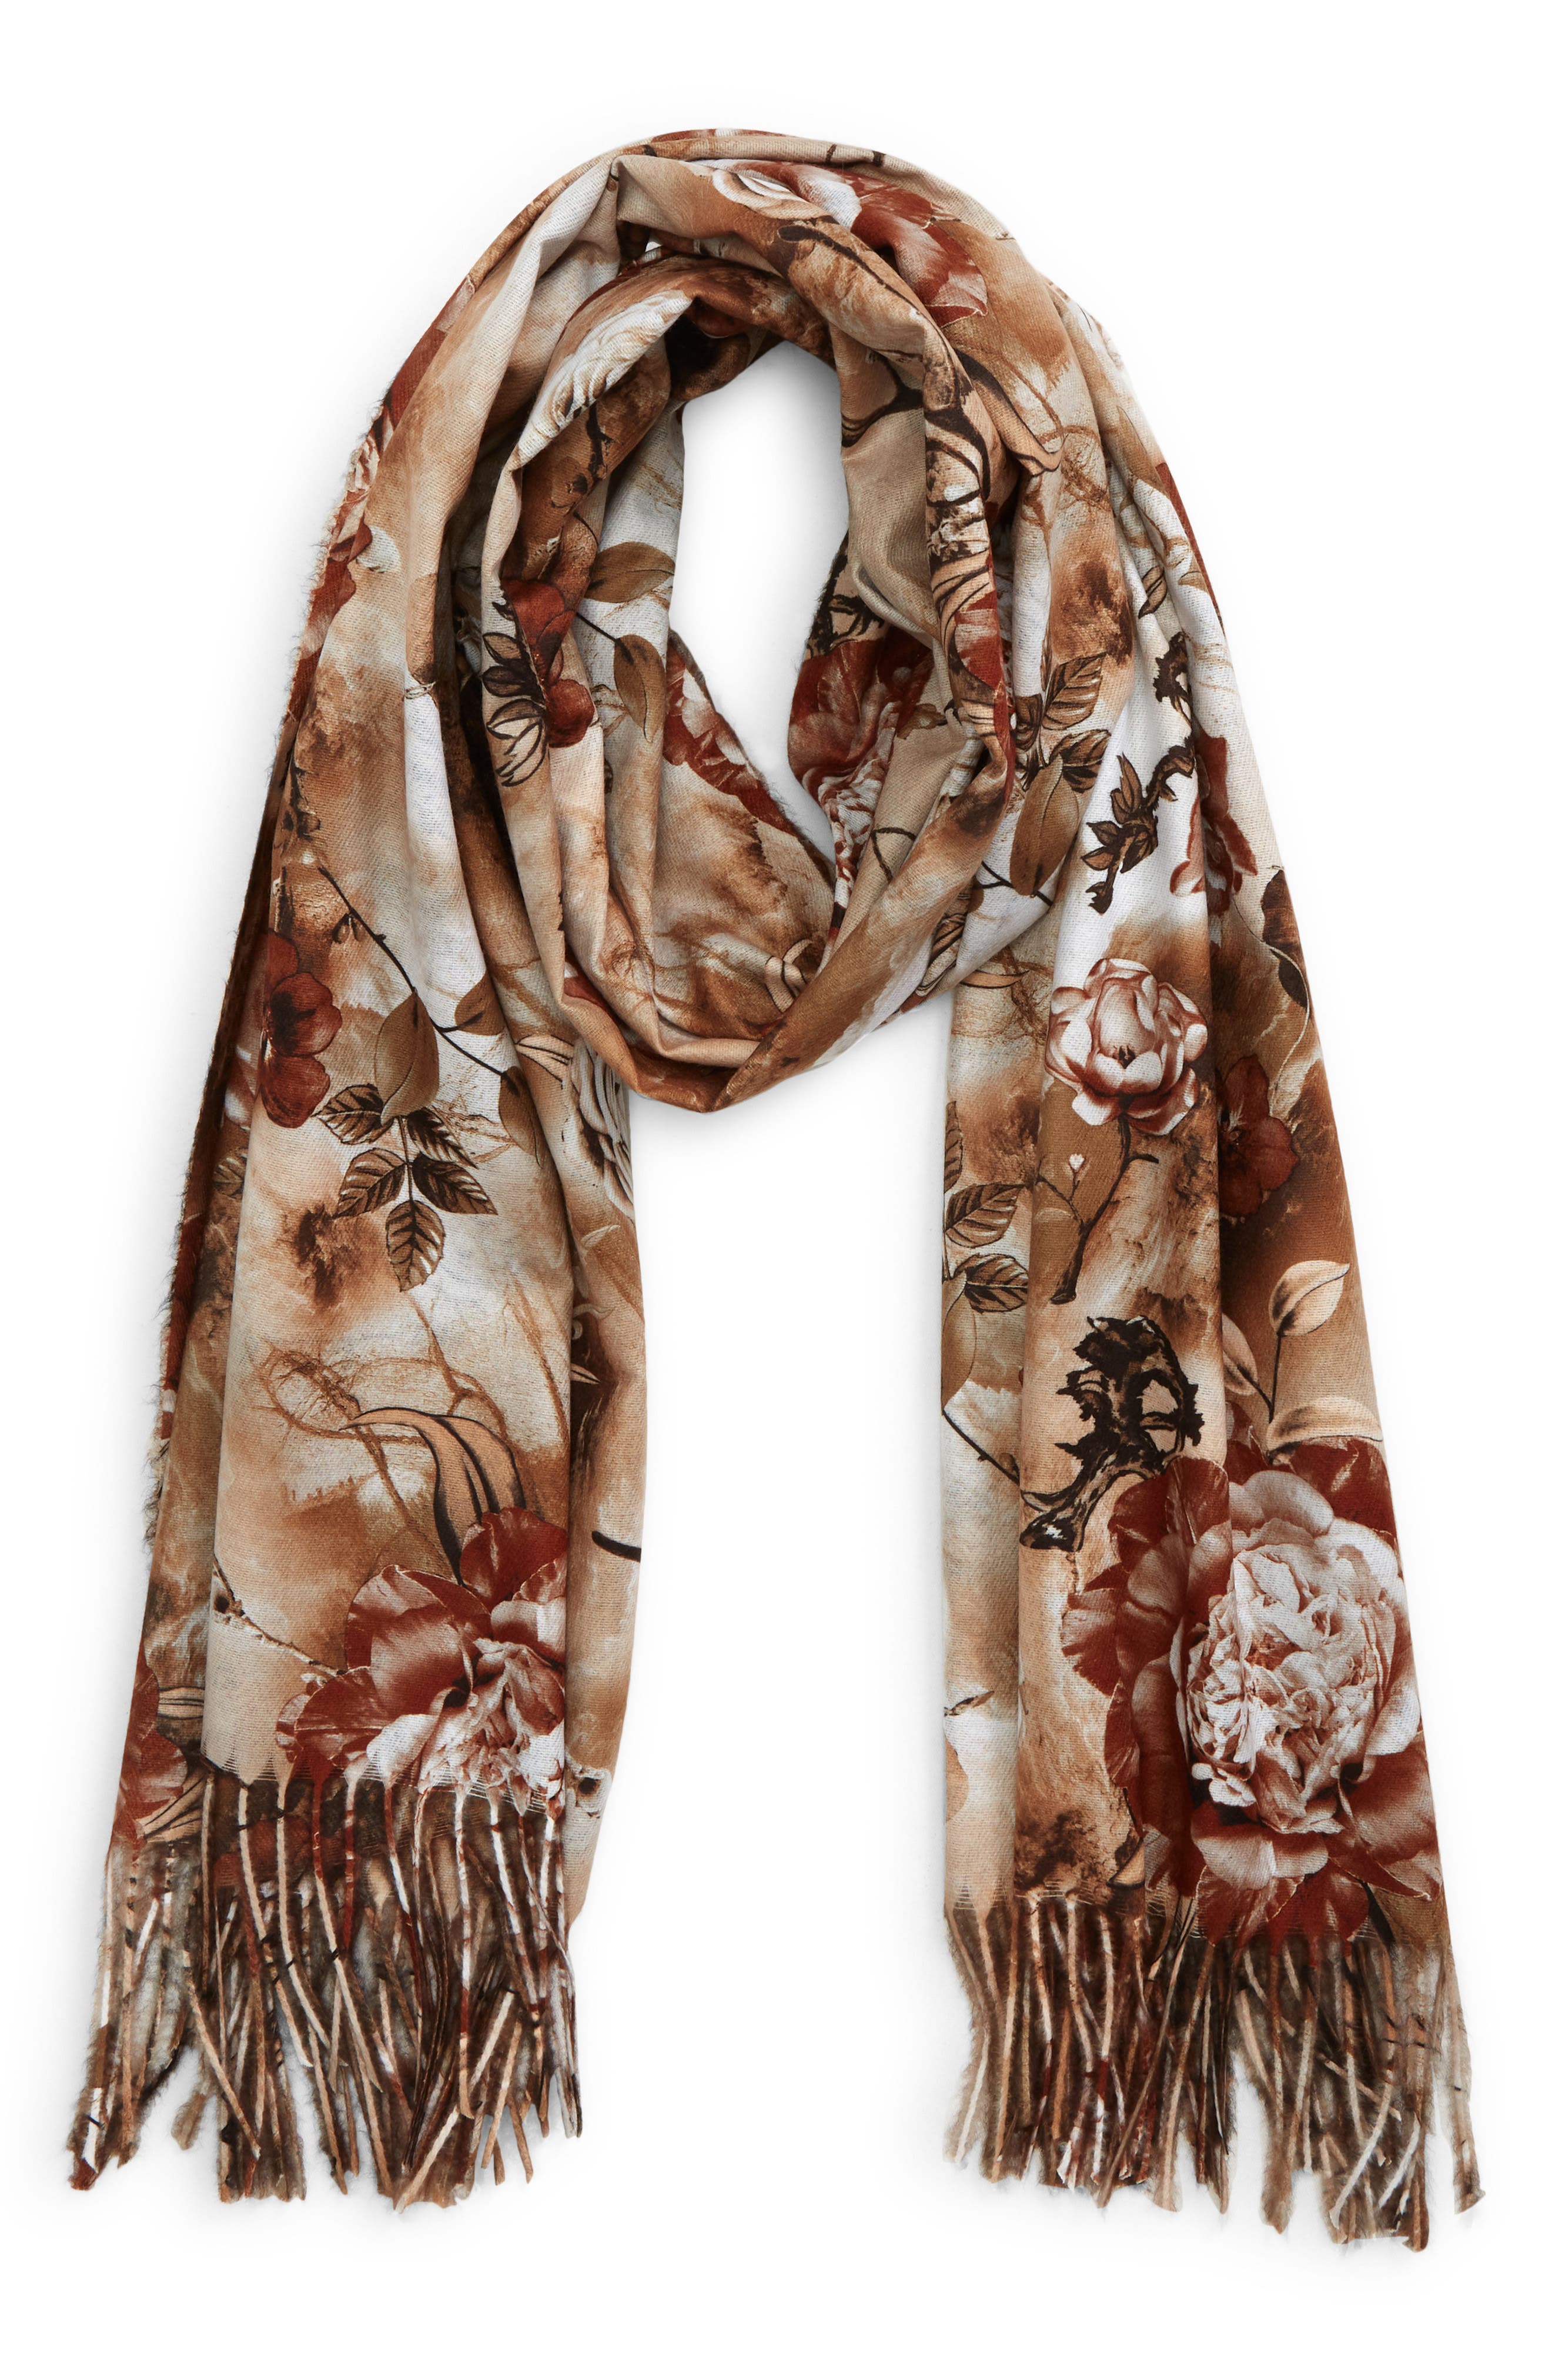 Elegant Oblong Fashion Scarf Wrap Chiffon w/ Stunning Floral Pattern Ivory/Brown